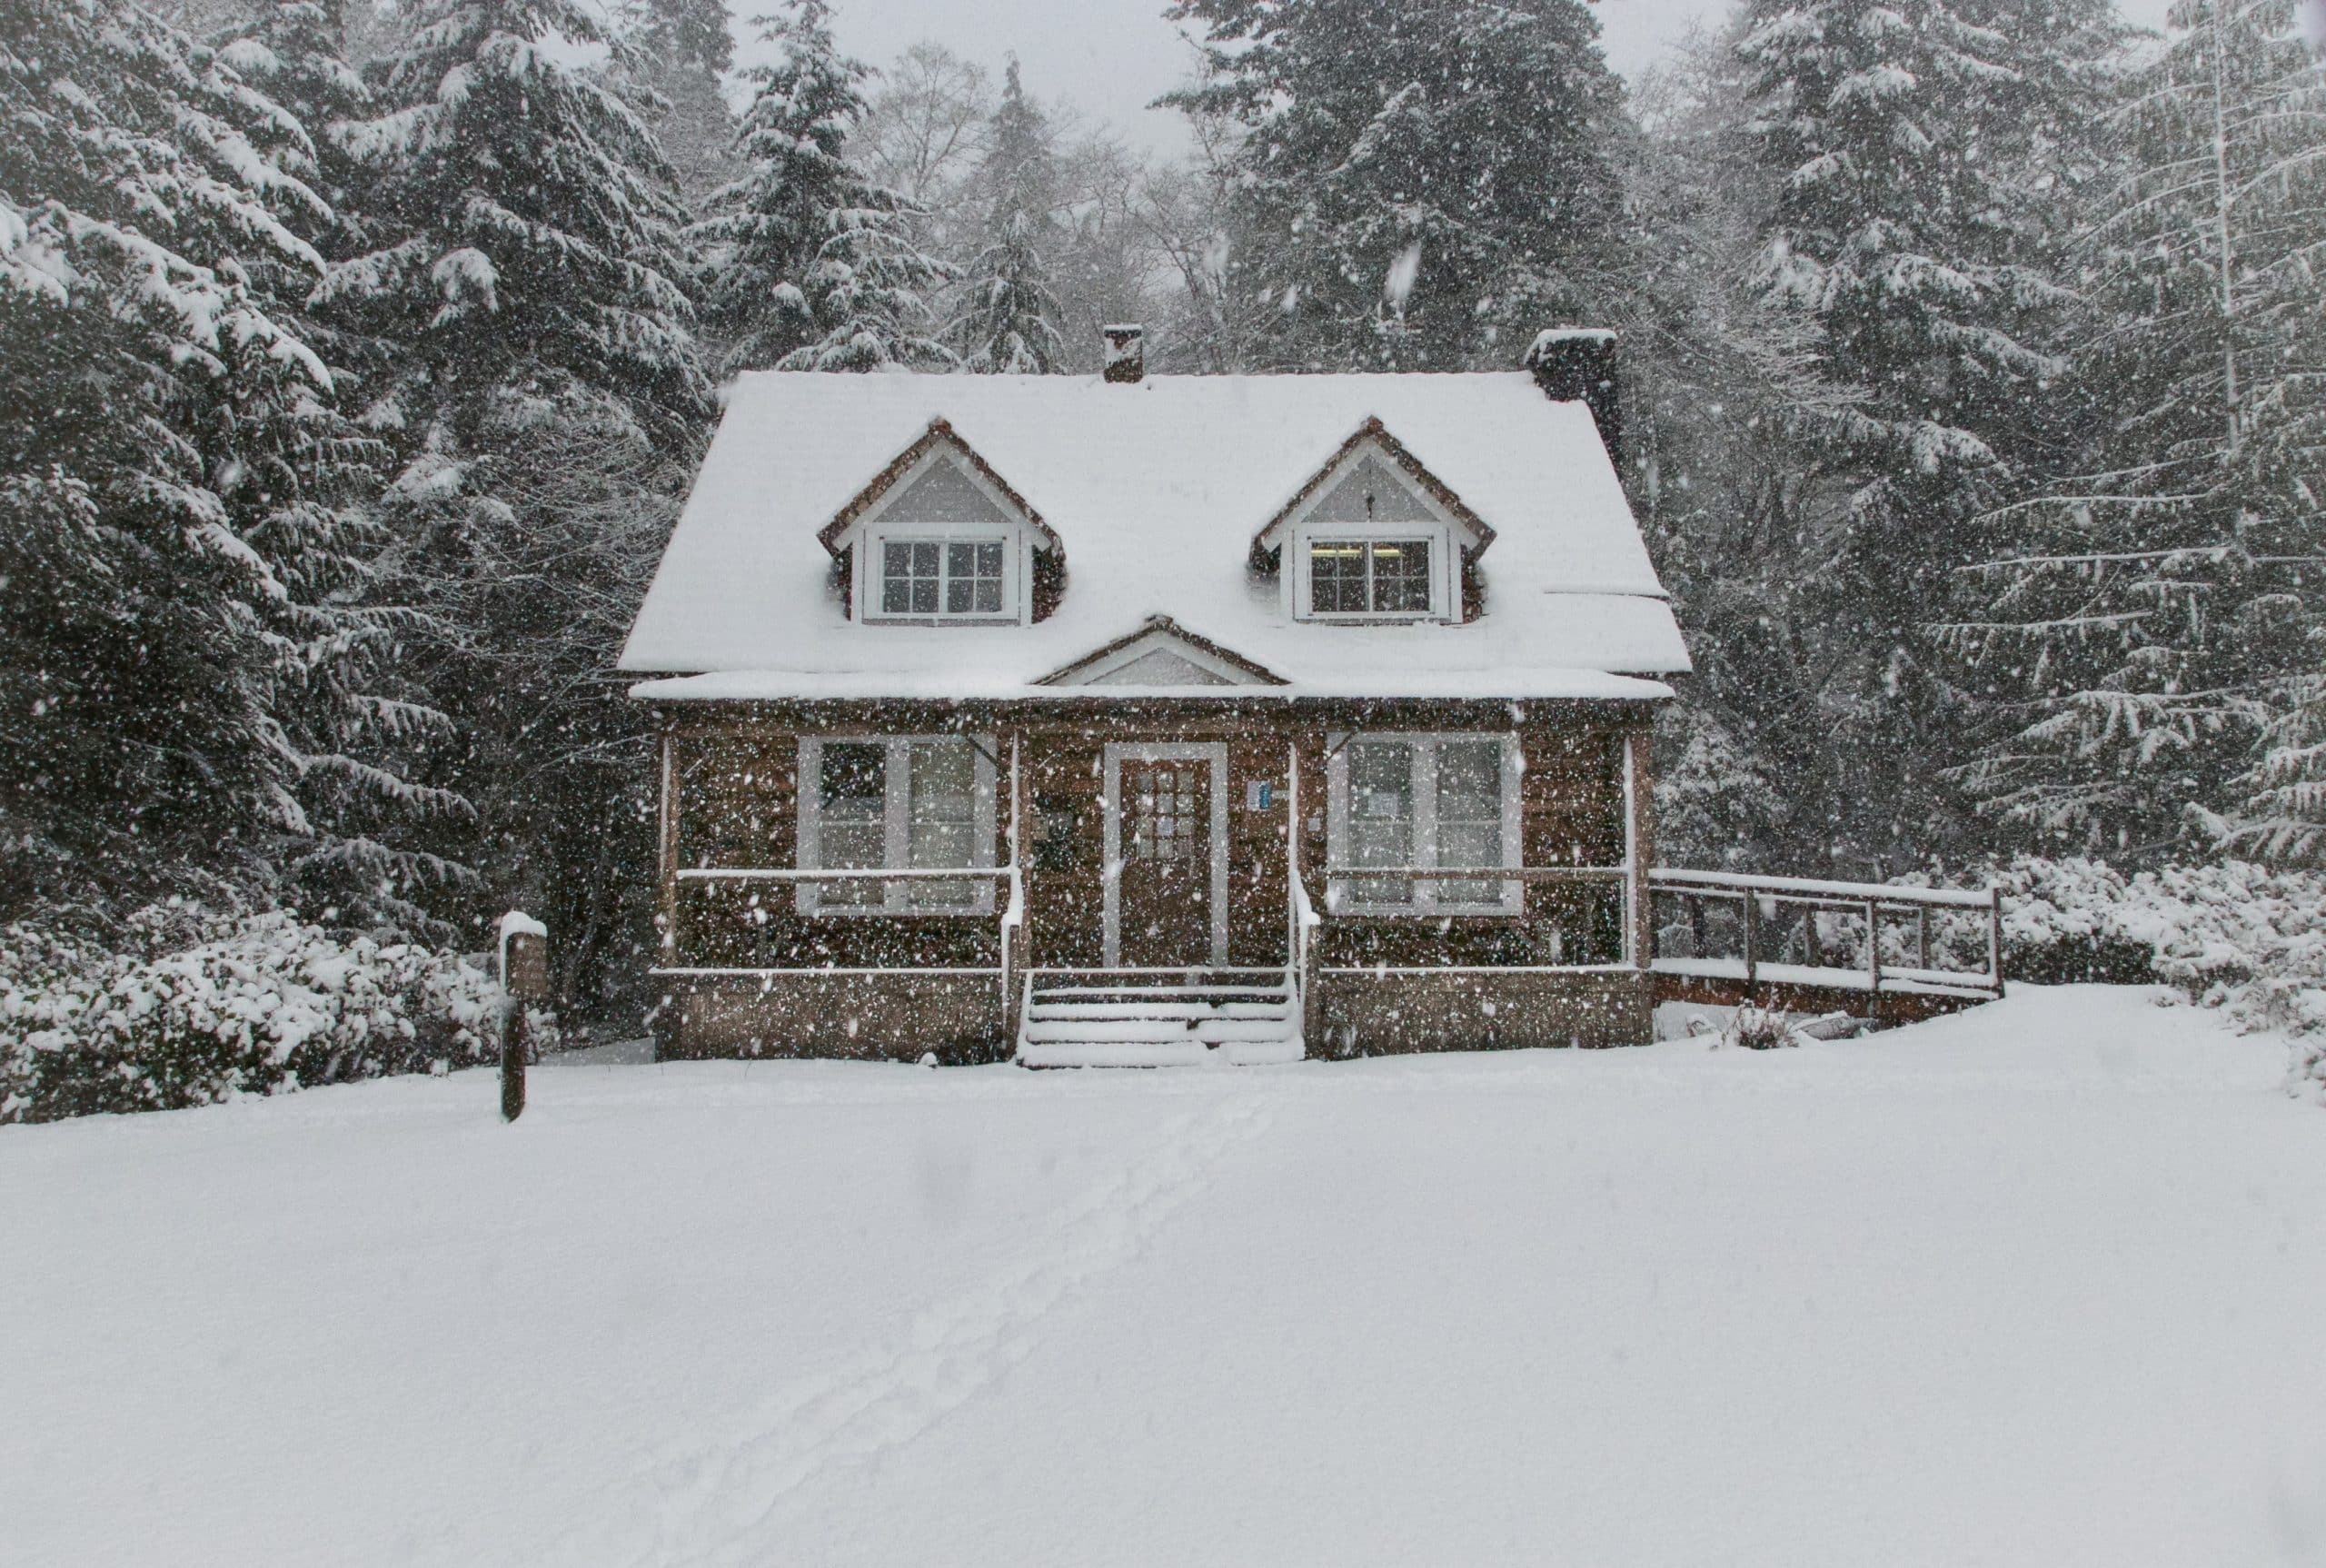 snow-cabin